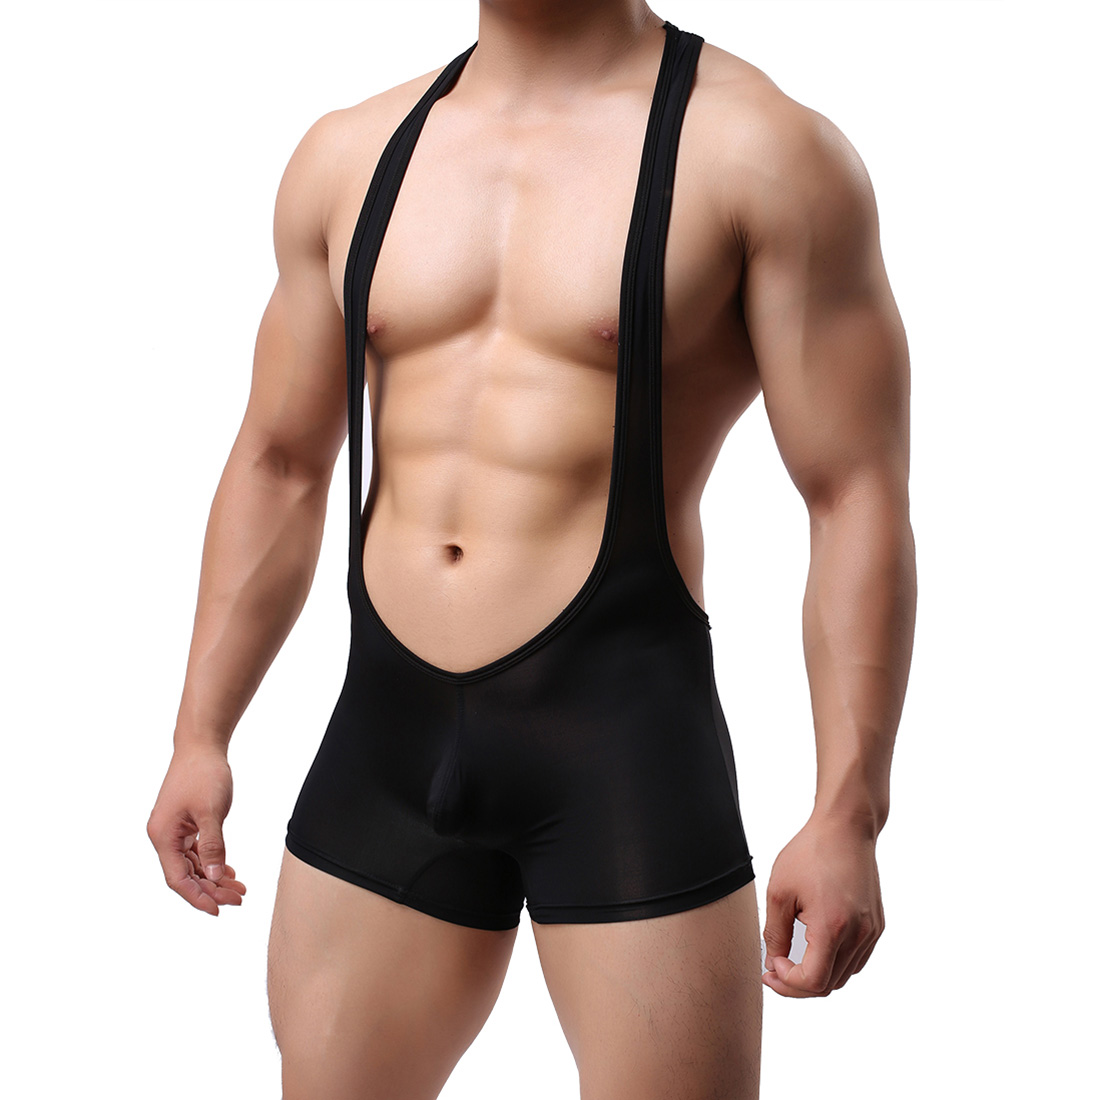 Men's Sexy Lingerie Underwear Sport Fitness One-pieces Swimsuit Wrestling Dress WH41 Black M